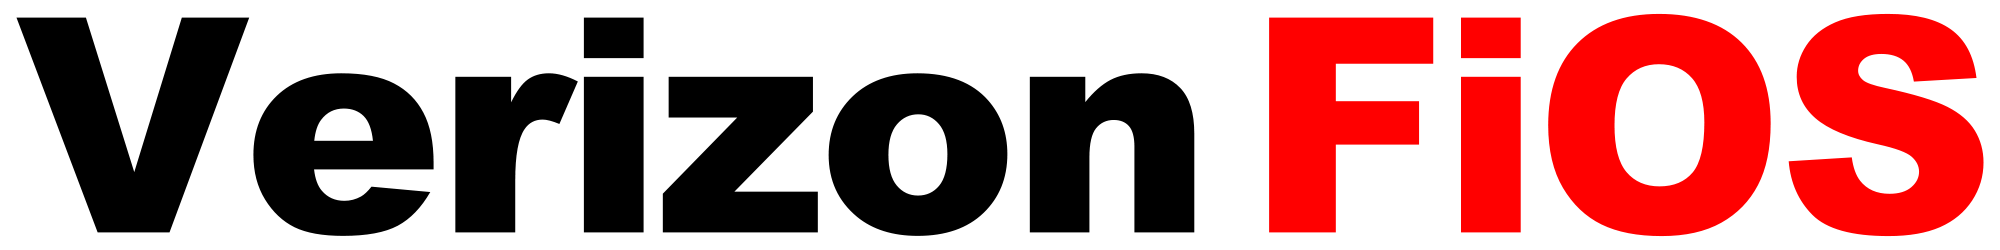 Verizon FiOS Logo - File:Verizon FiOS logo.svg - Wikimedia Commons